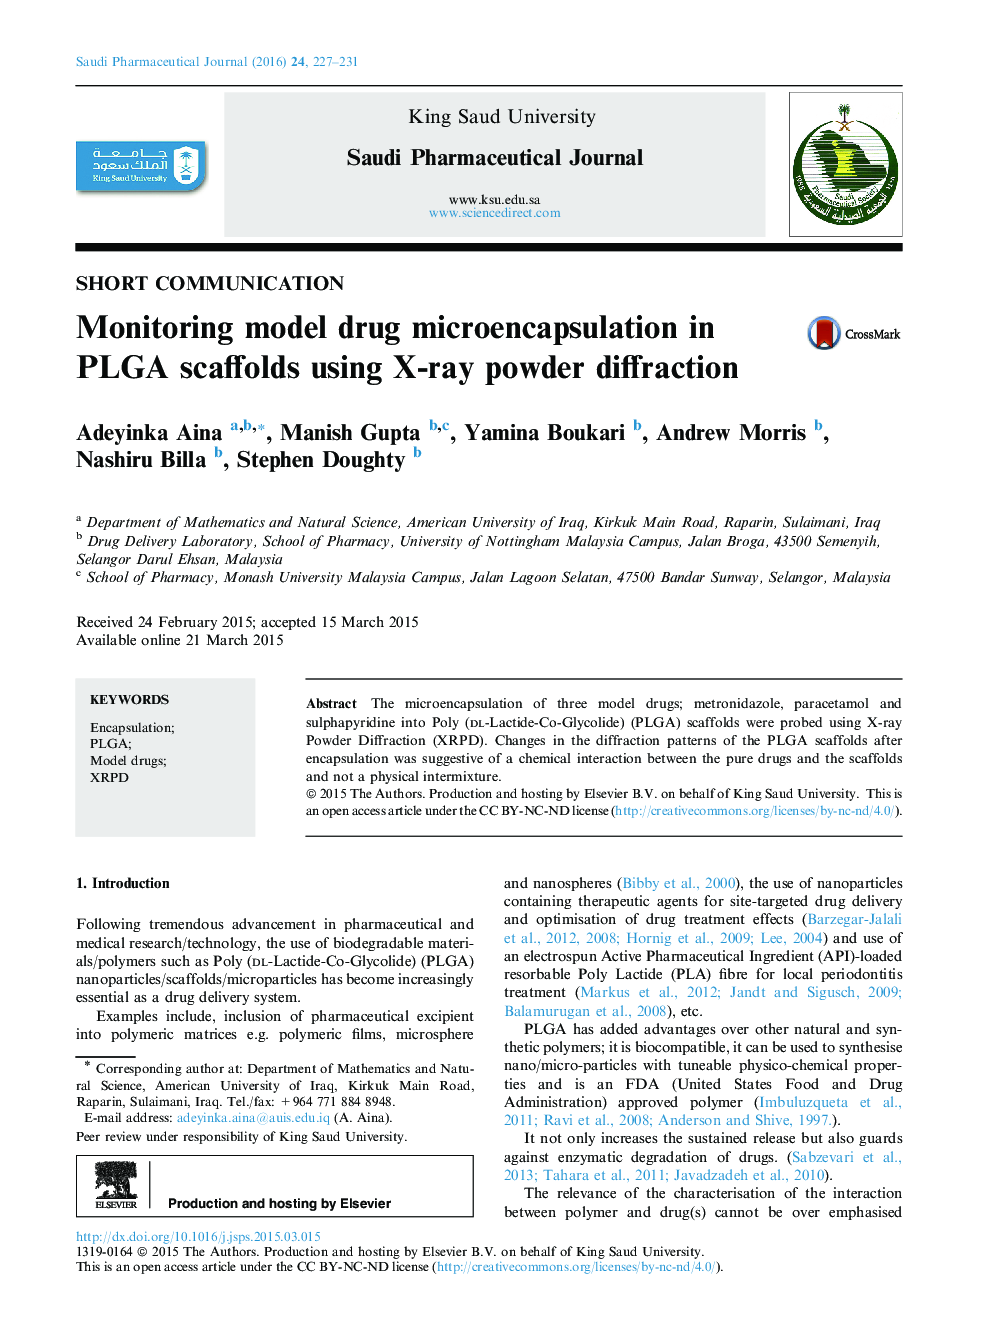 Monitoring model drug microencapsulation in PLGA scaffolds using X-ray powder diffraction 